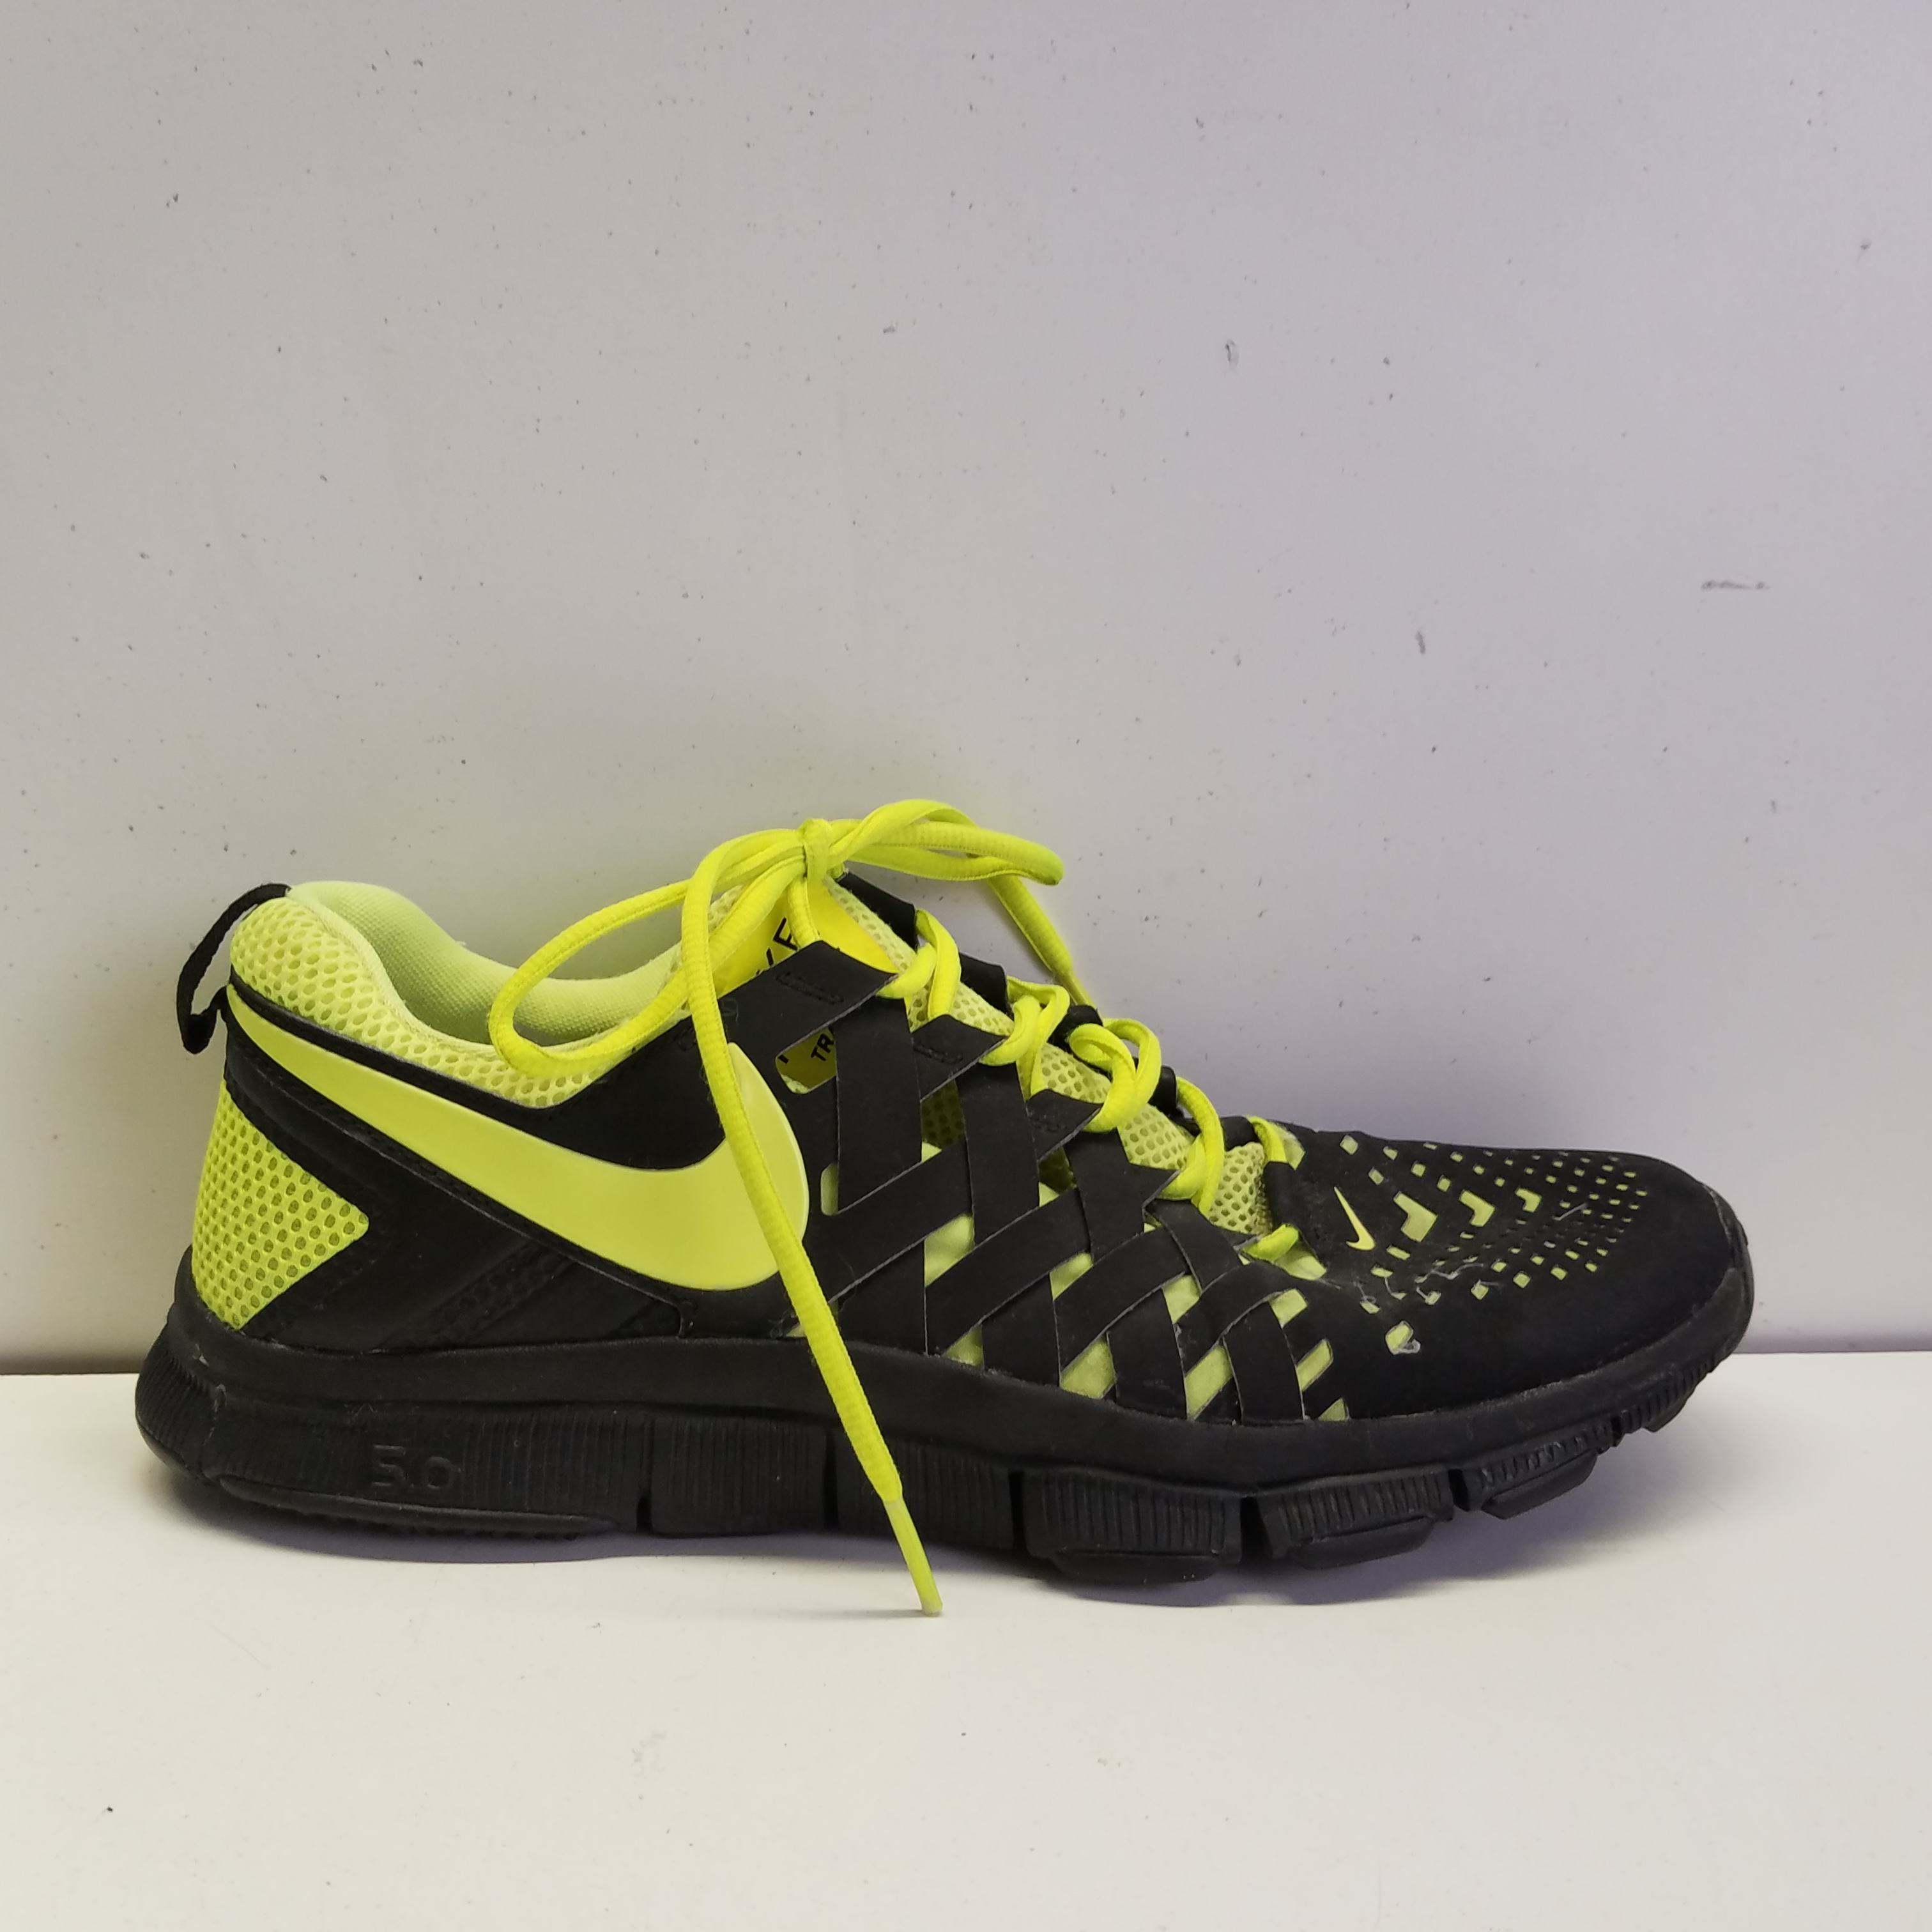 Componist Maak een bed Staat Buy the Nike Free Trainer 5.0 Black Neon Yellow Running Shoes US 10.5 |  GoodwillFinds